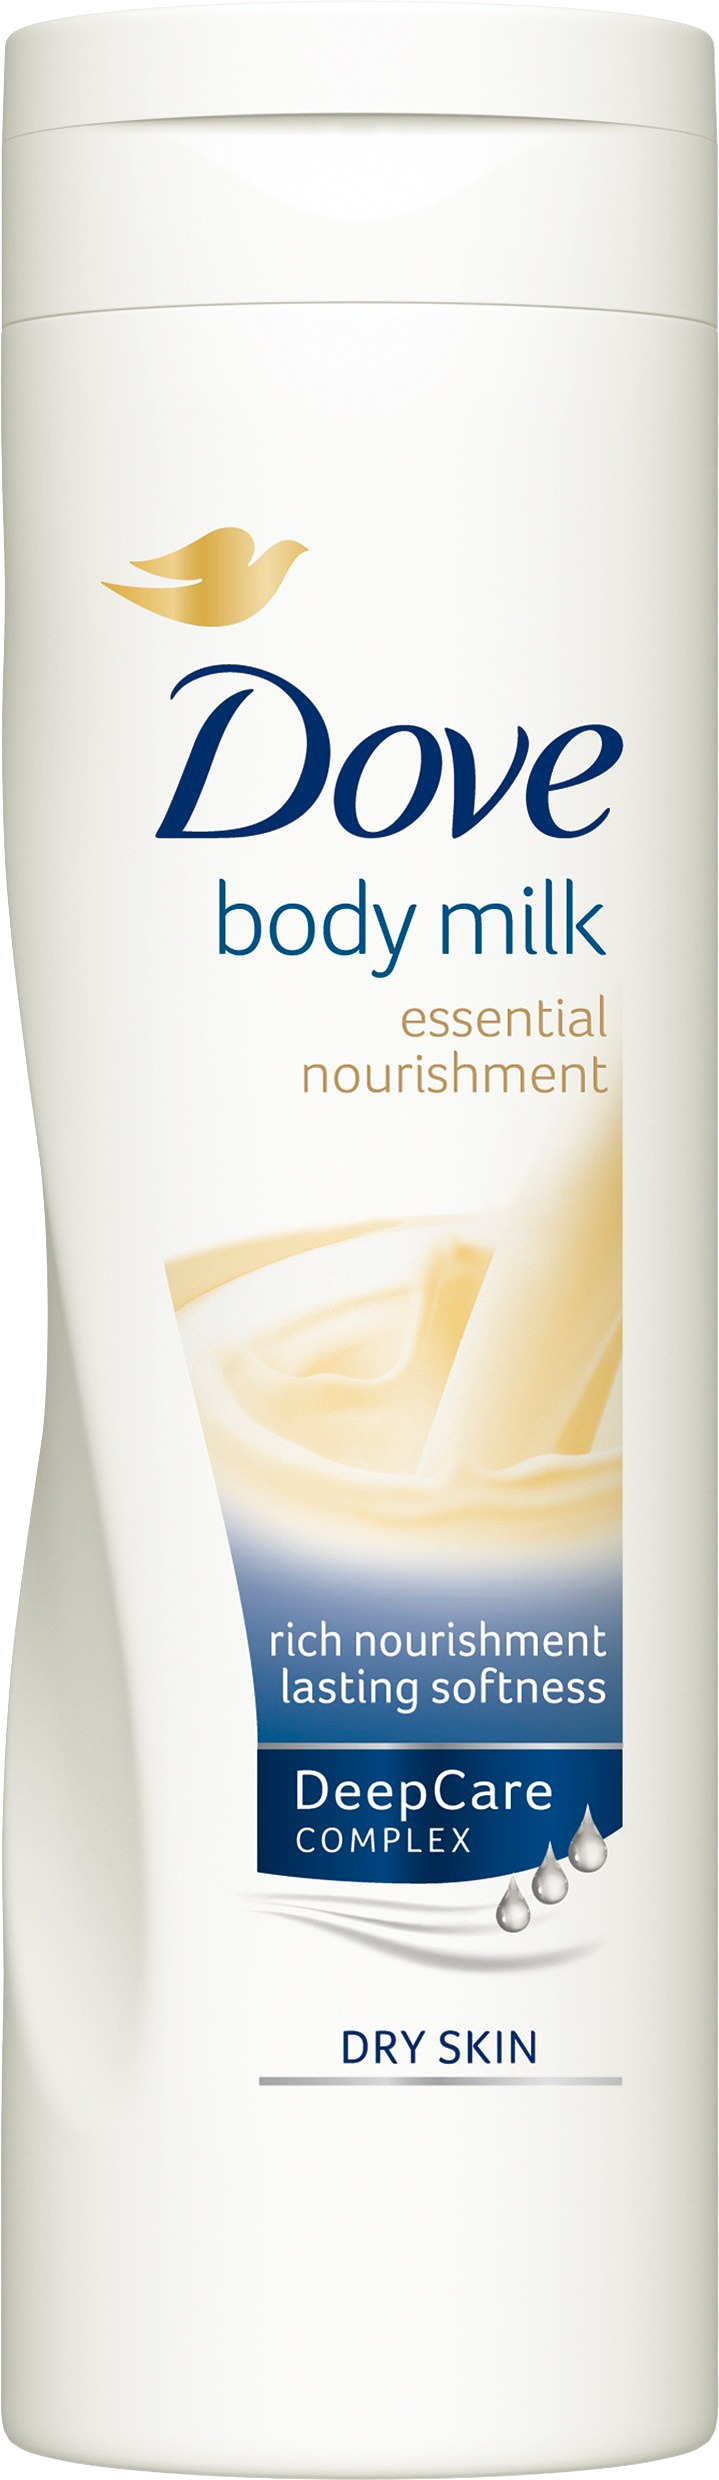 Dove Essential Nourishing Body Milk 250 ml